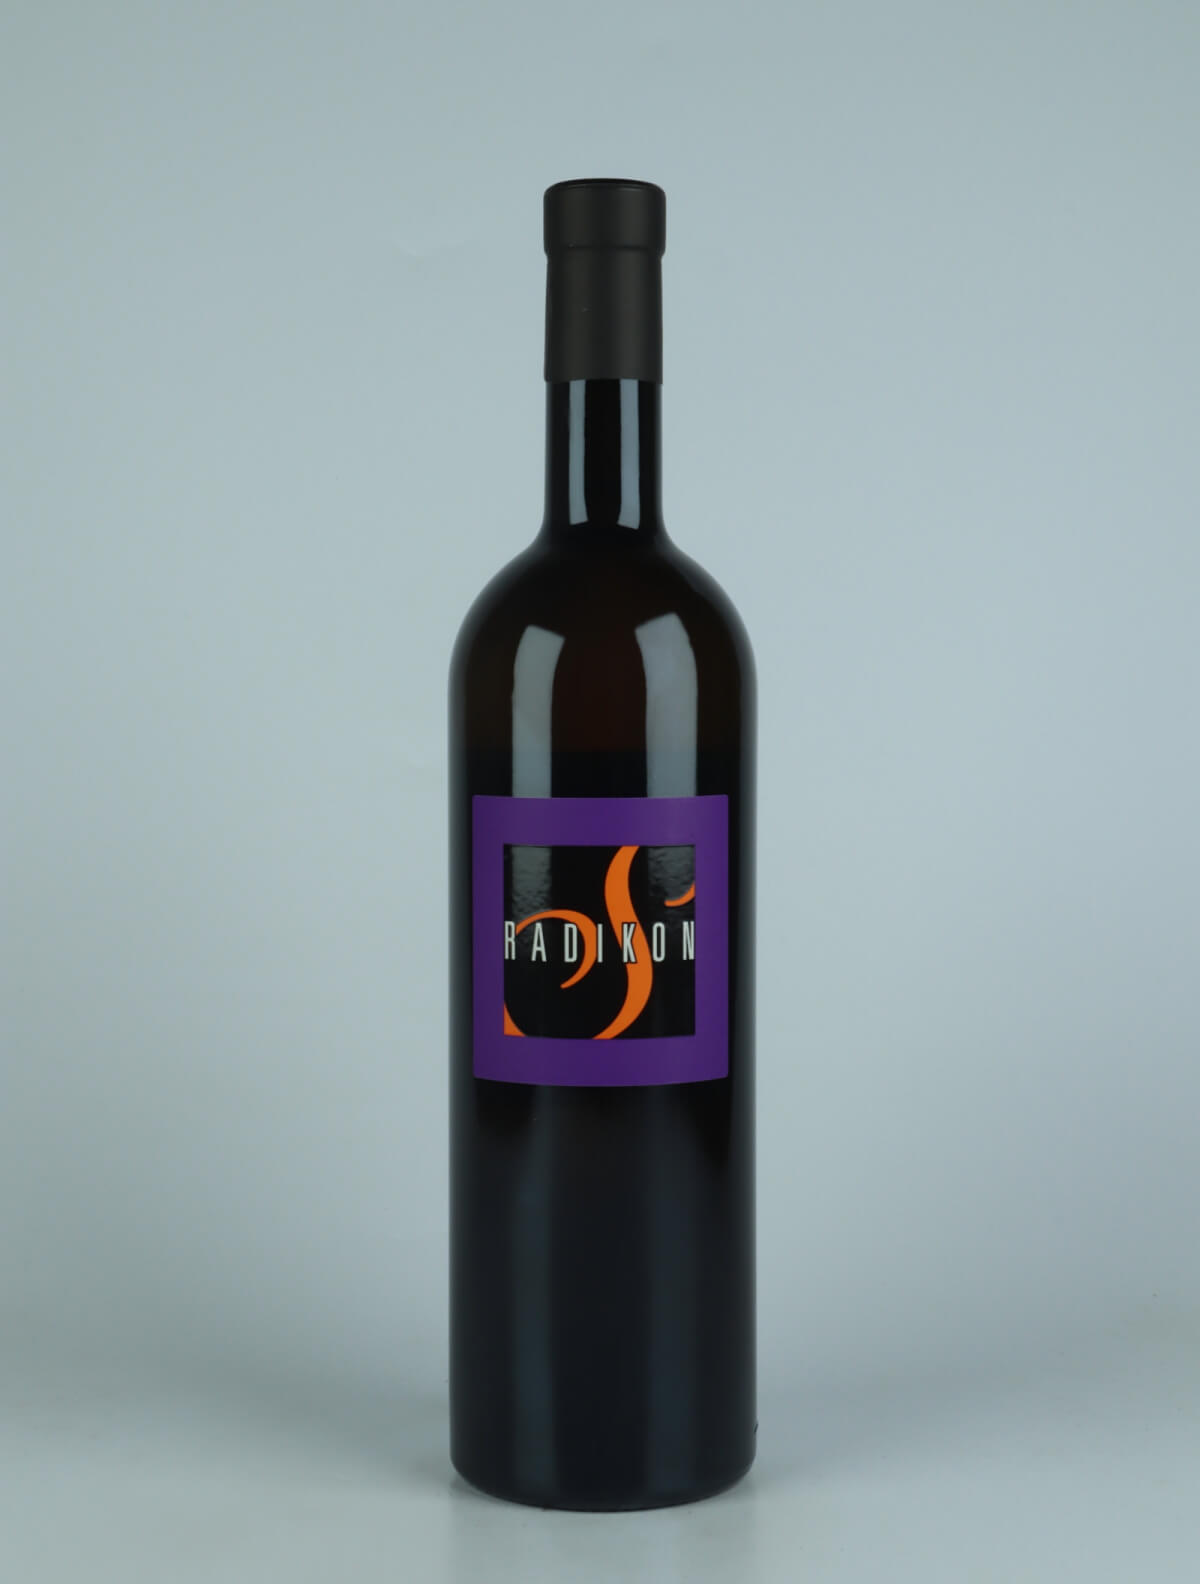 En flaske 2021 Slatnik Orange vin fra Radikon, Friuli i Italien